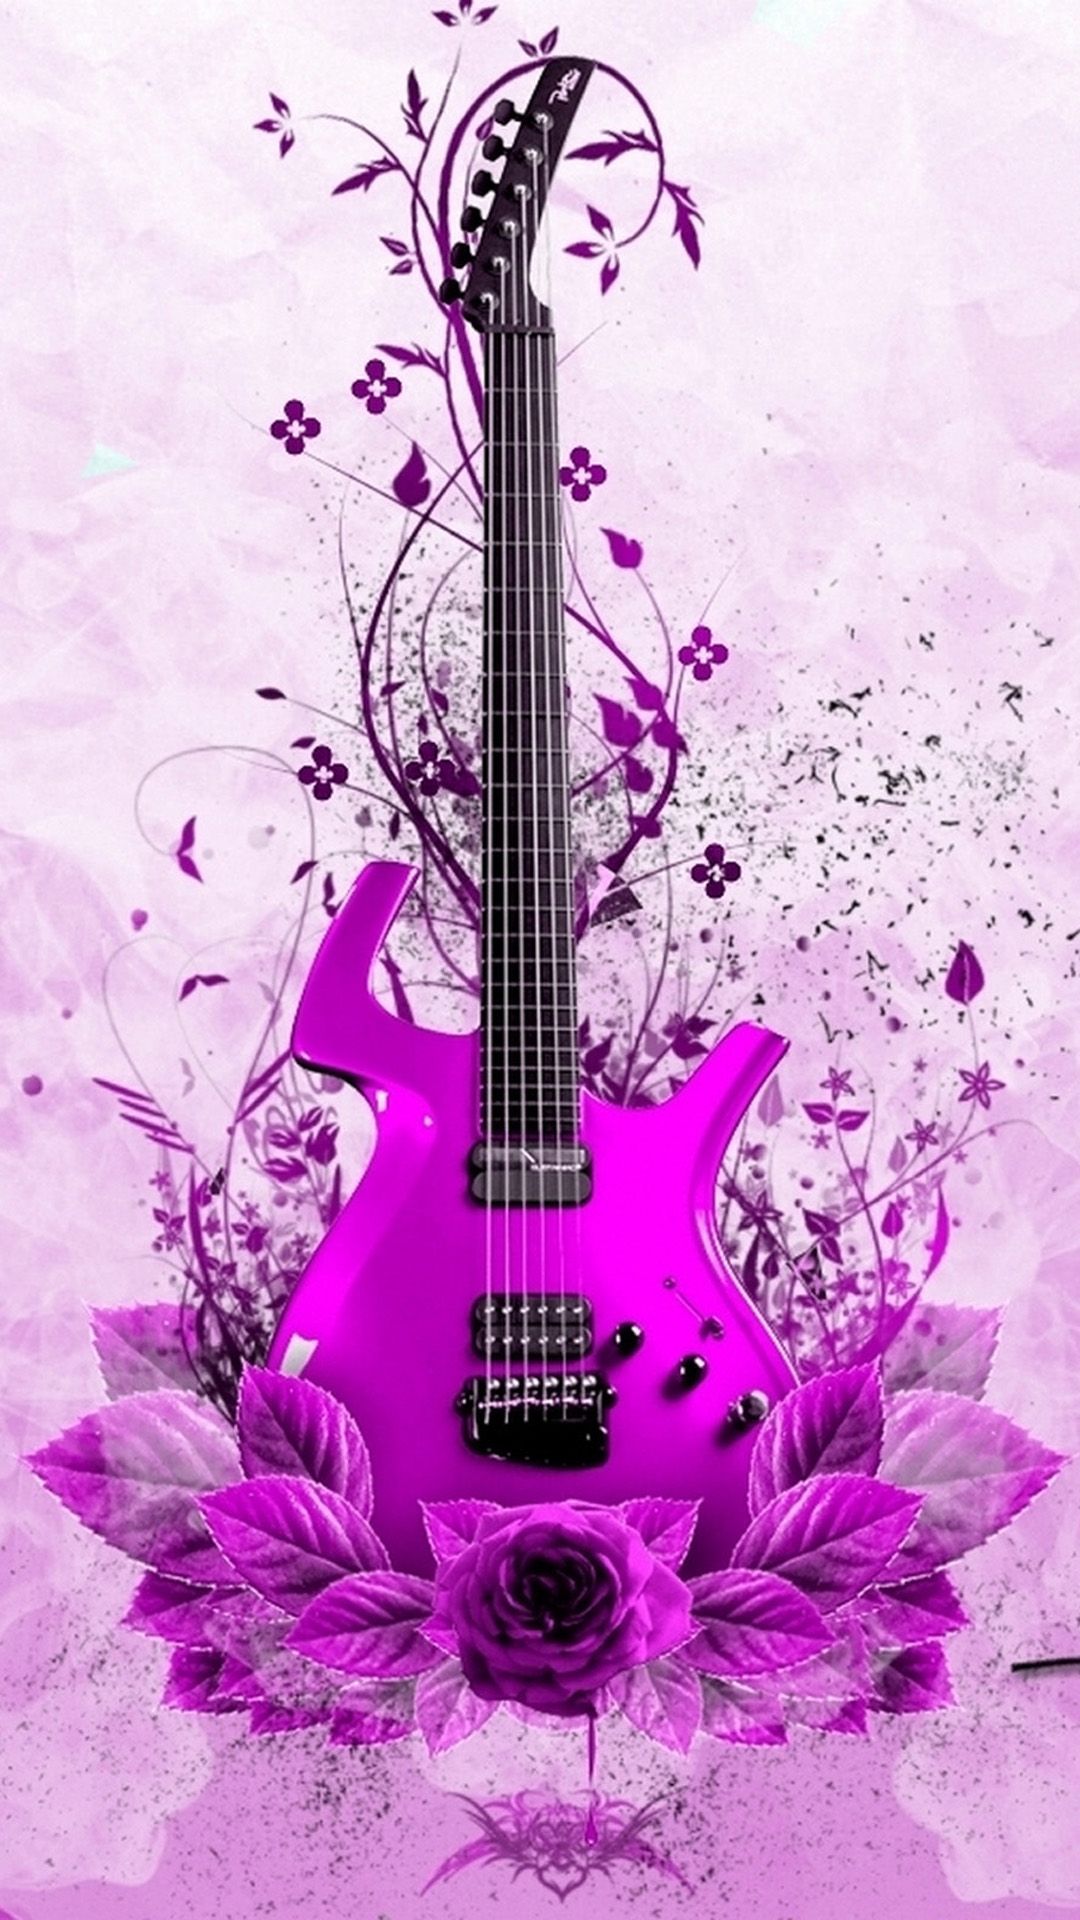 Abstract Music Guitar Instrument iPhone 8 Wallpaper. Pink guitar